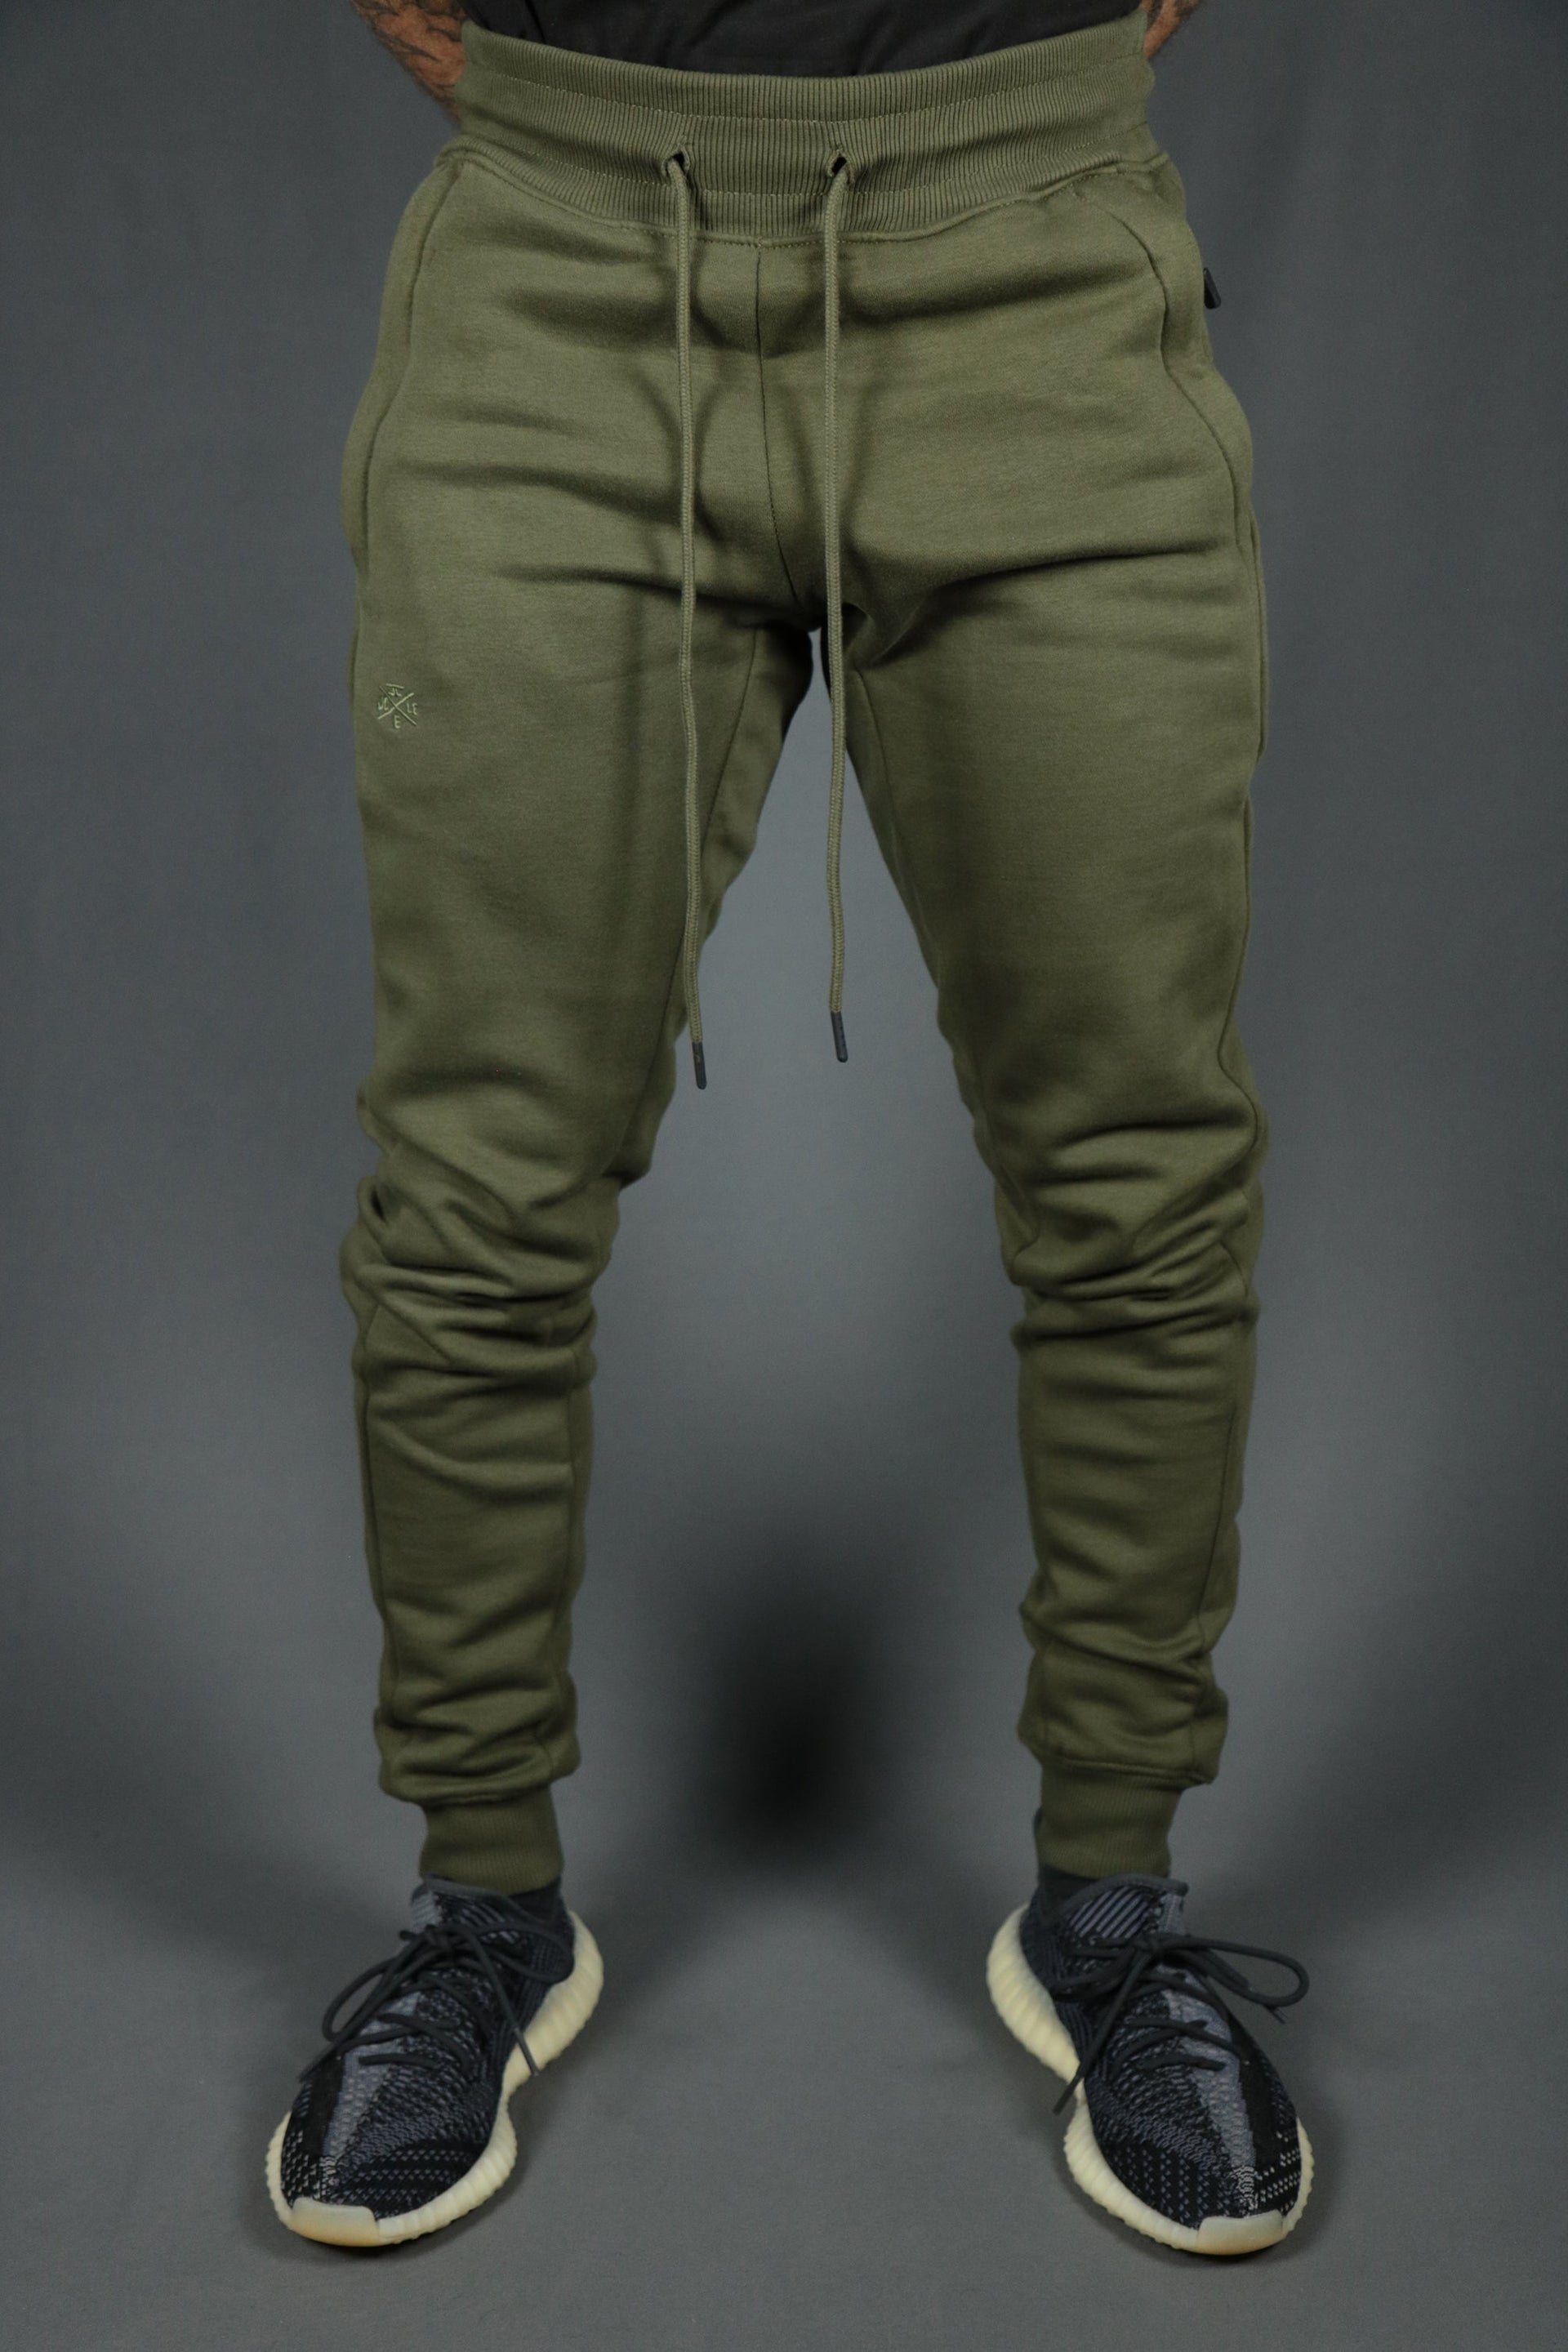 The basic fleece military green jogger pants with logo trim bottom by Jordan Craig.